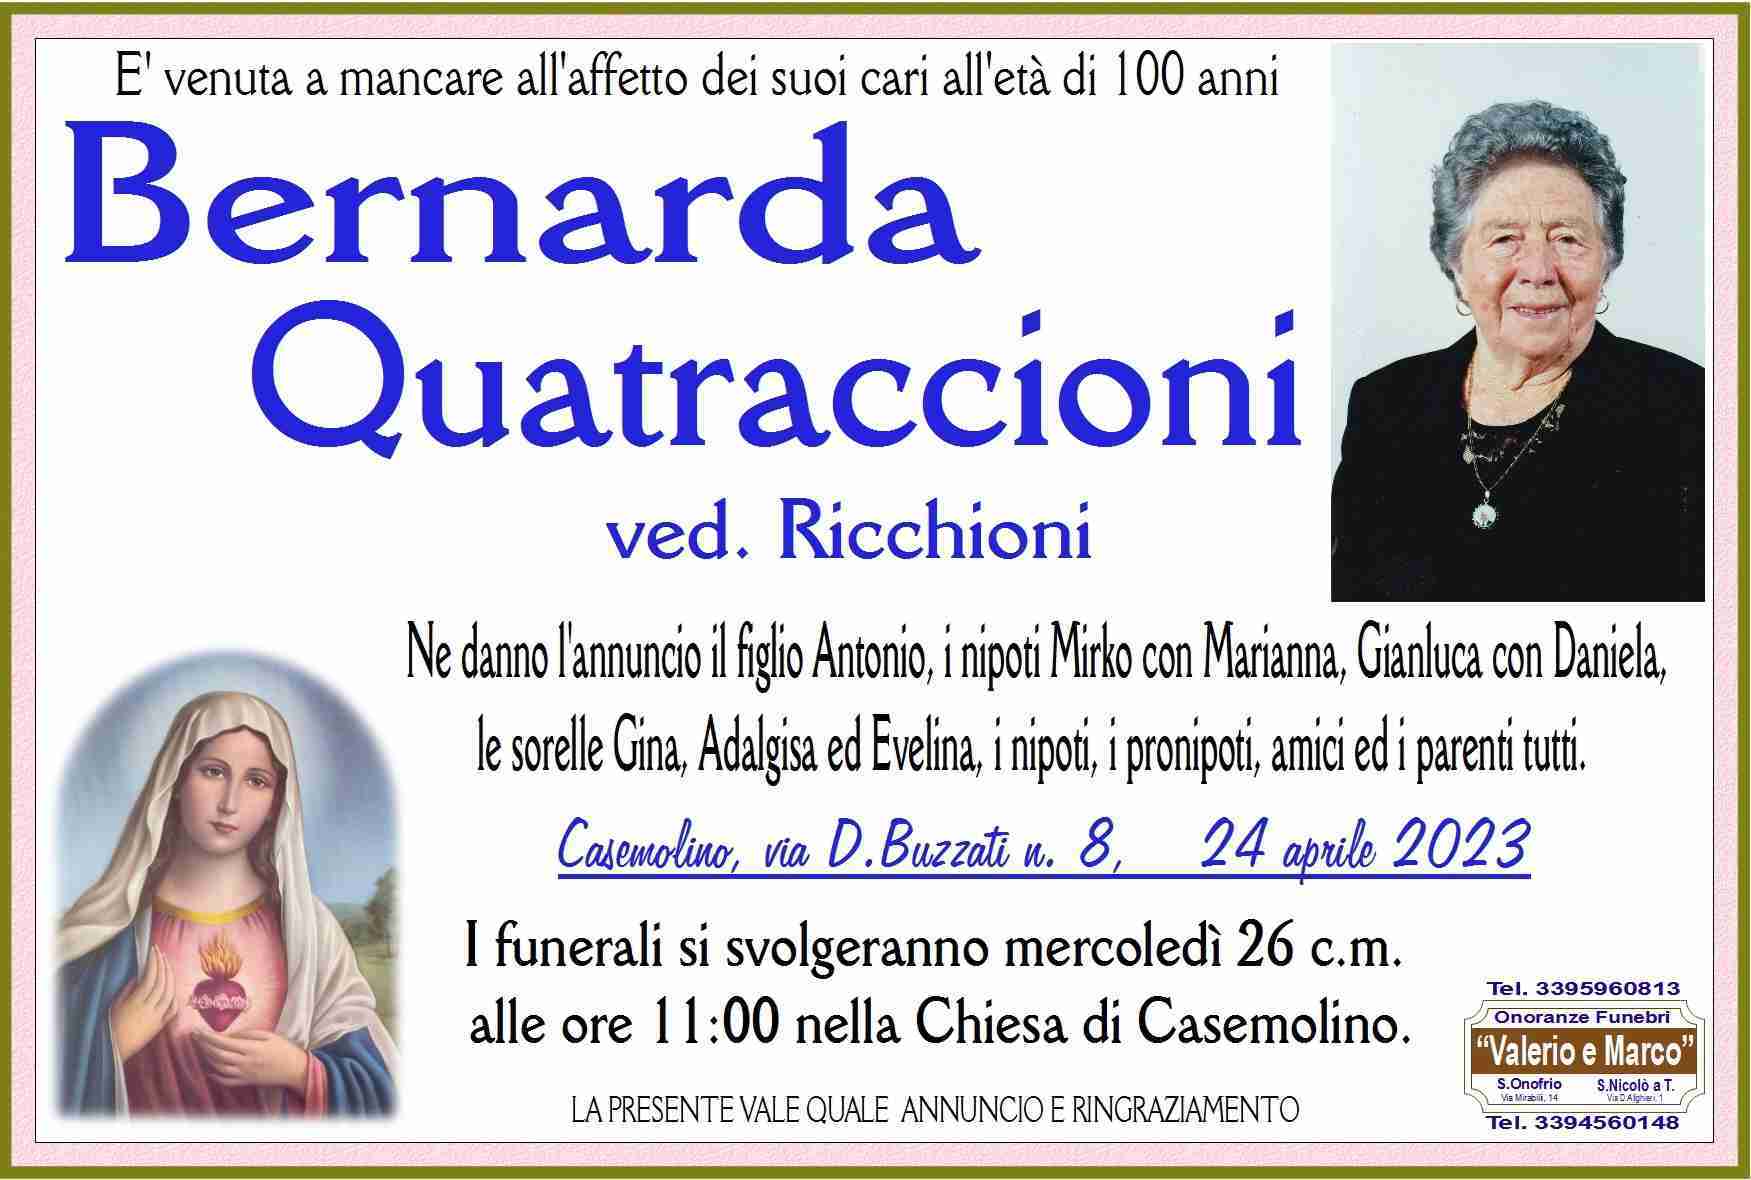 Bernarda Quatraccioni